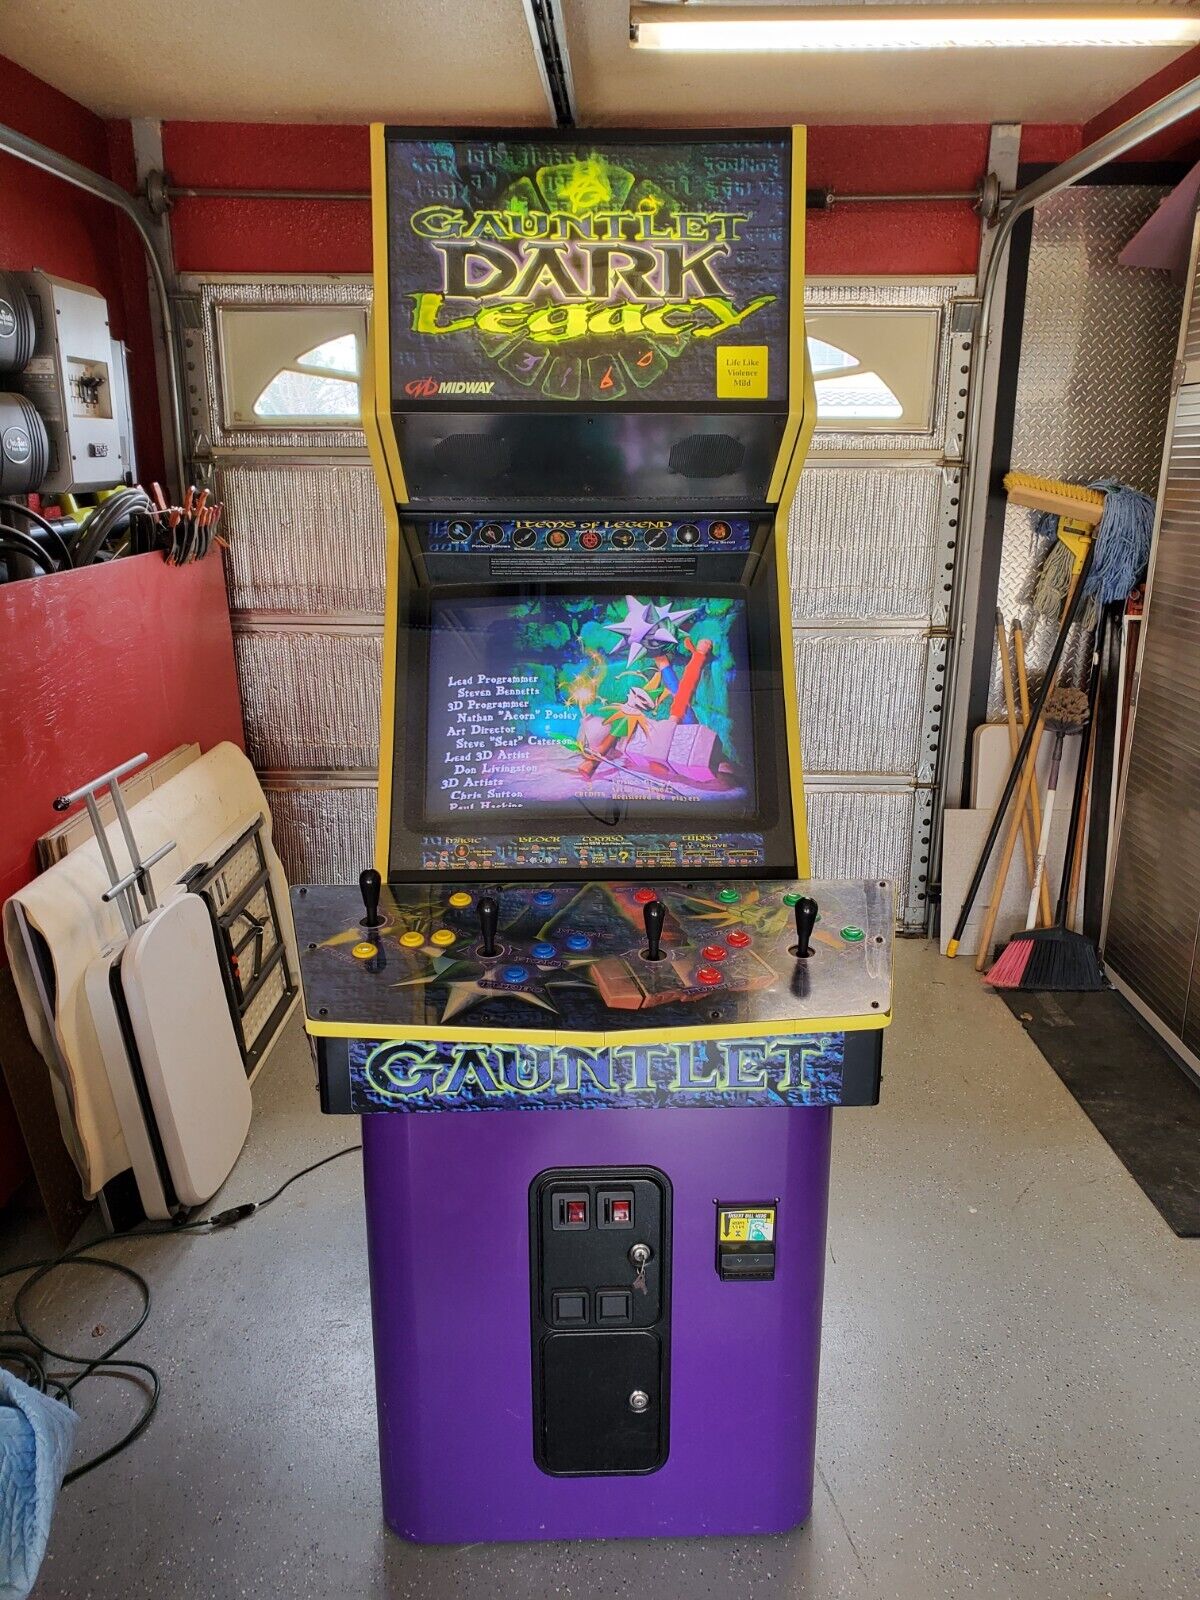 Gauntlet Dark Legacy arcade game 4 player 